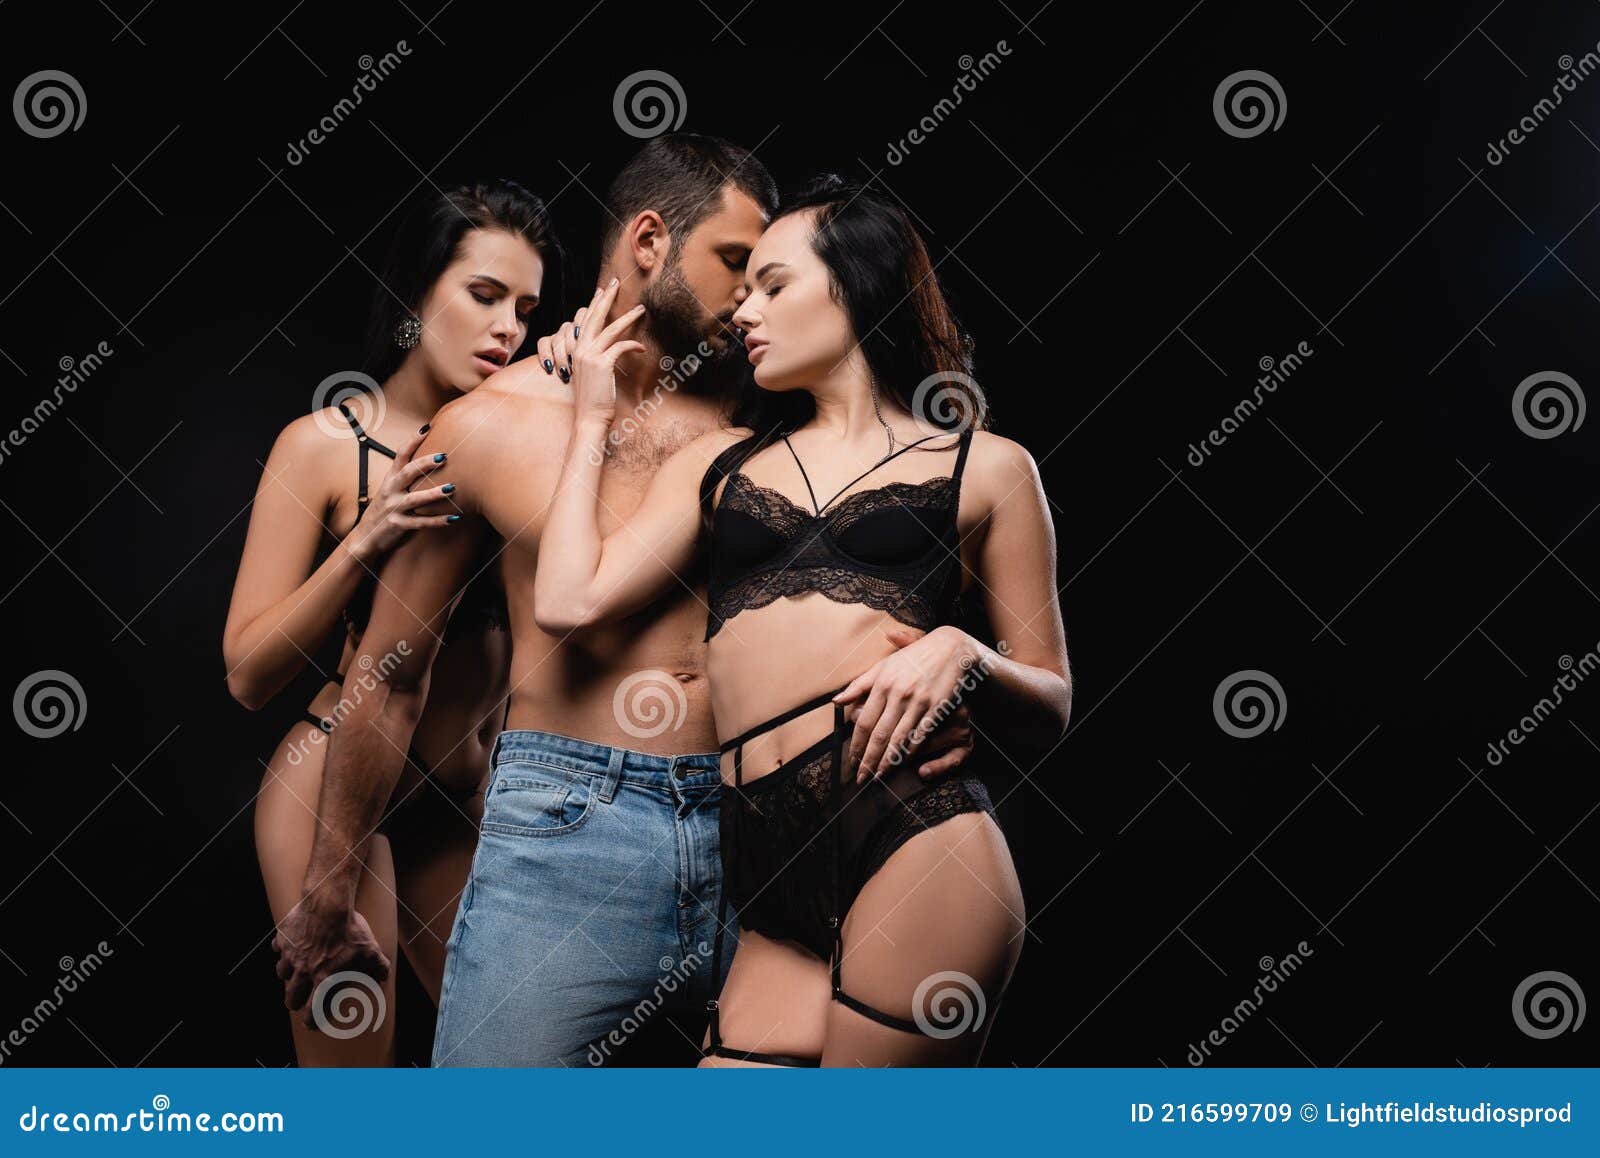 Mujeres Apasionadas En Ropa Interior Abrazando Sexy Imagen de archivo -  Imagen de hombres, shirtless: 216599709